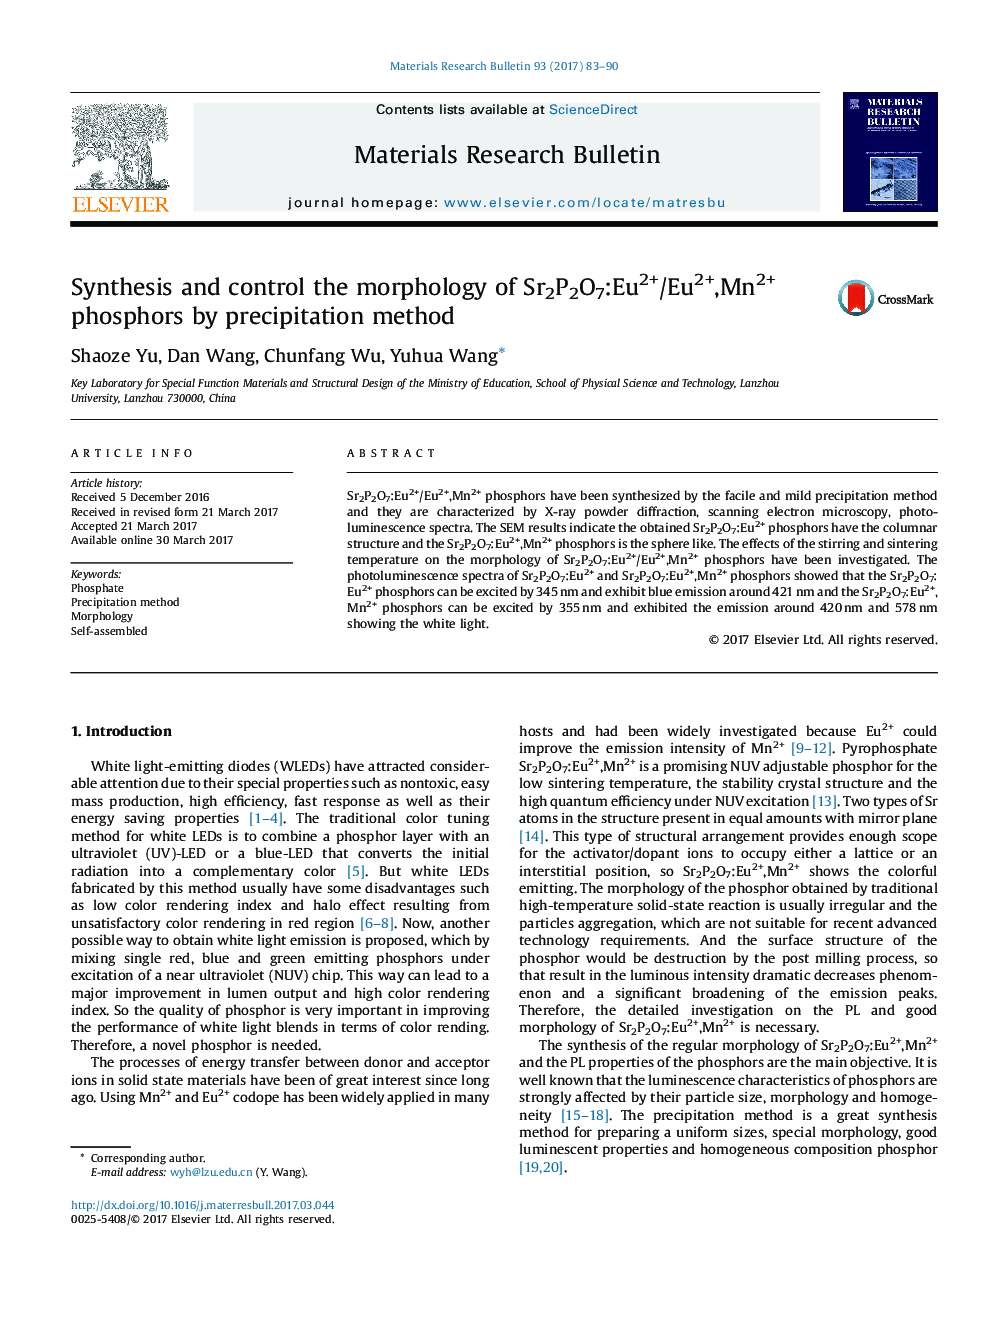 Synthesis and control the morphology of Sr2P2O7:Eu2+/Eu2+,Mn2+ phosphors by precipitation method